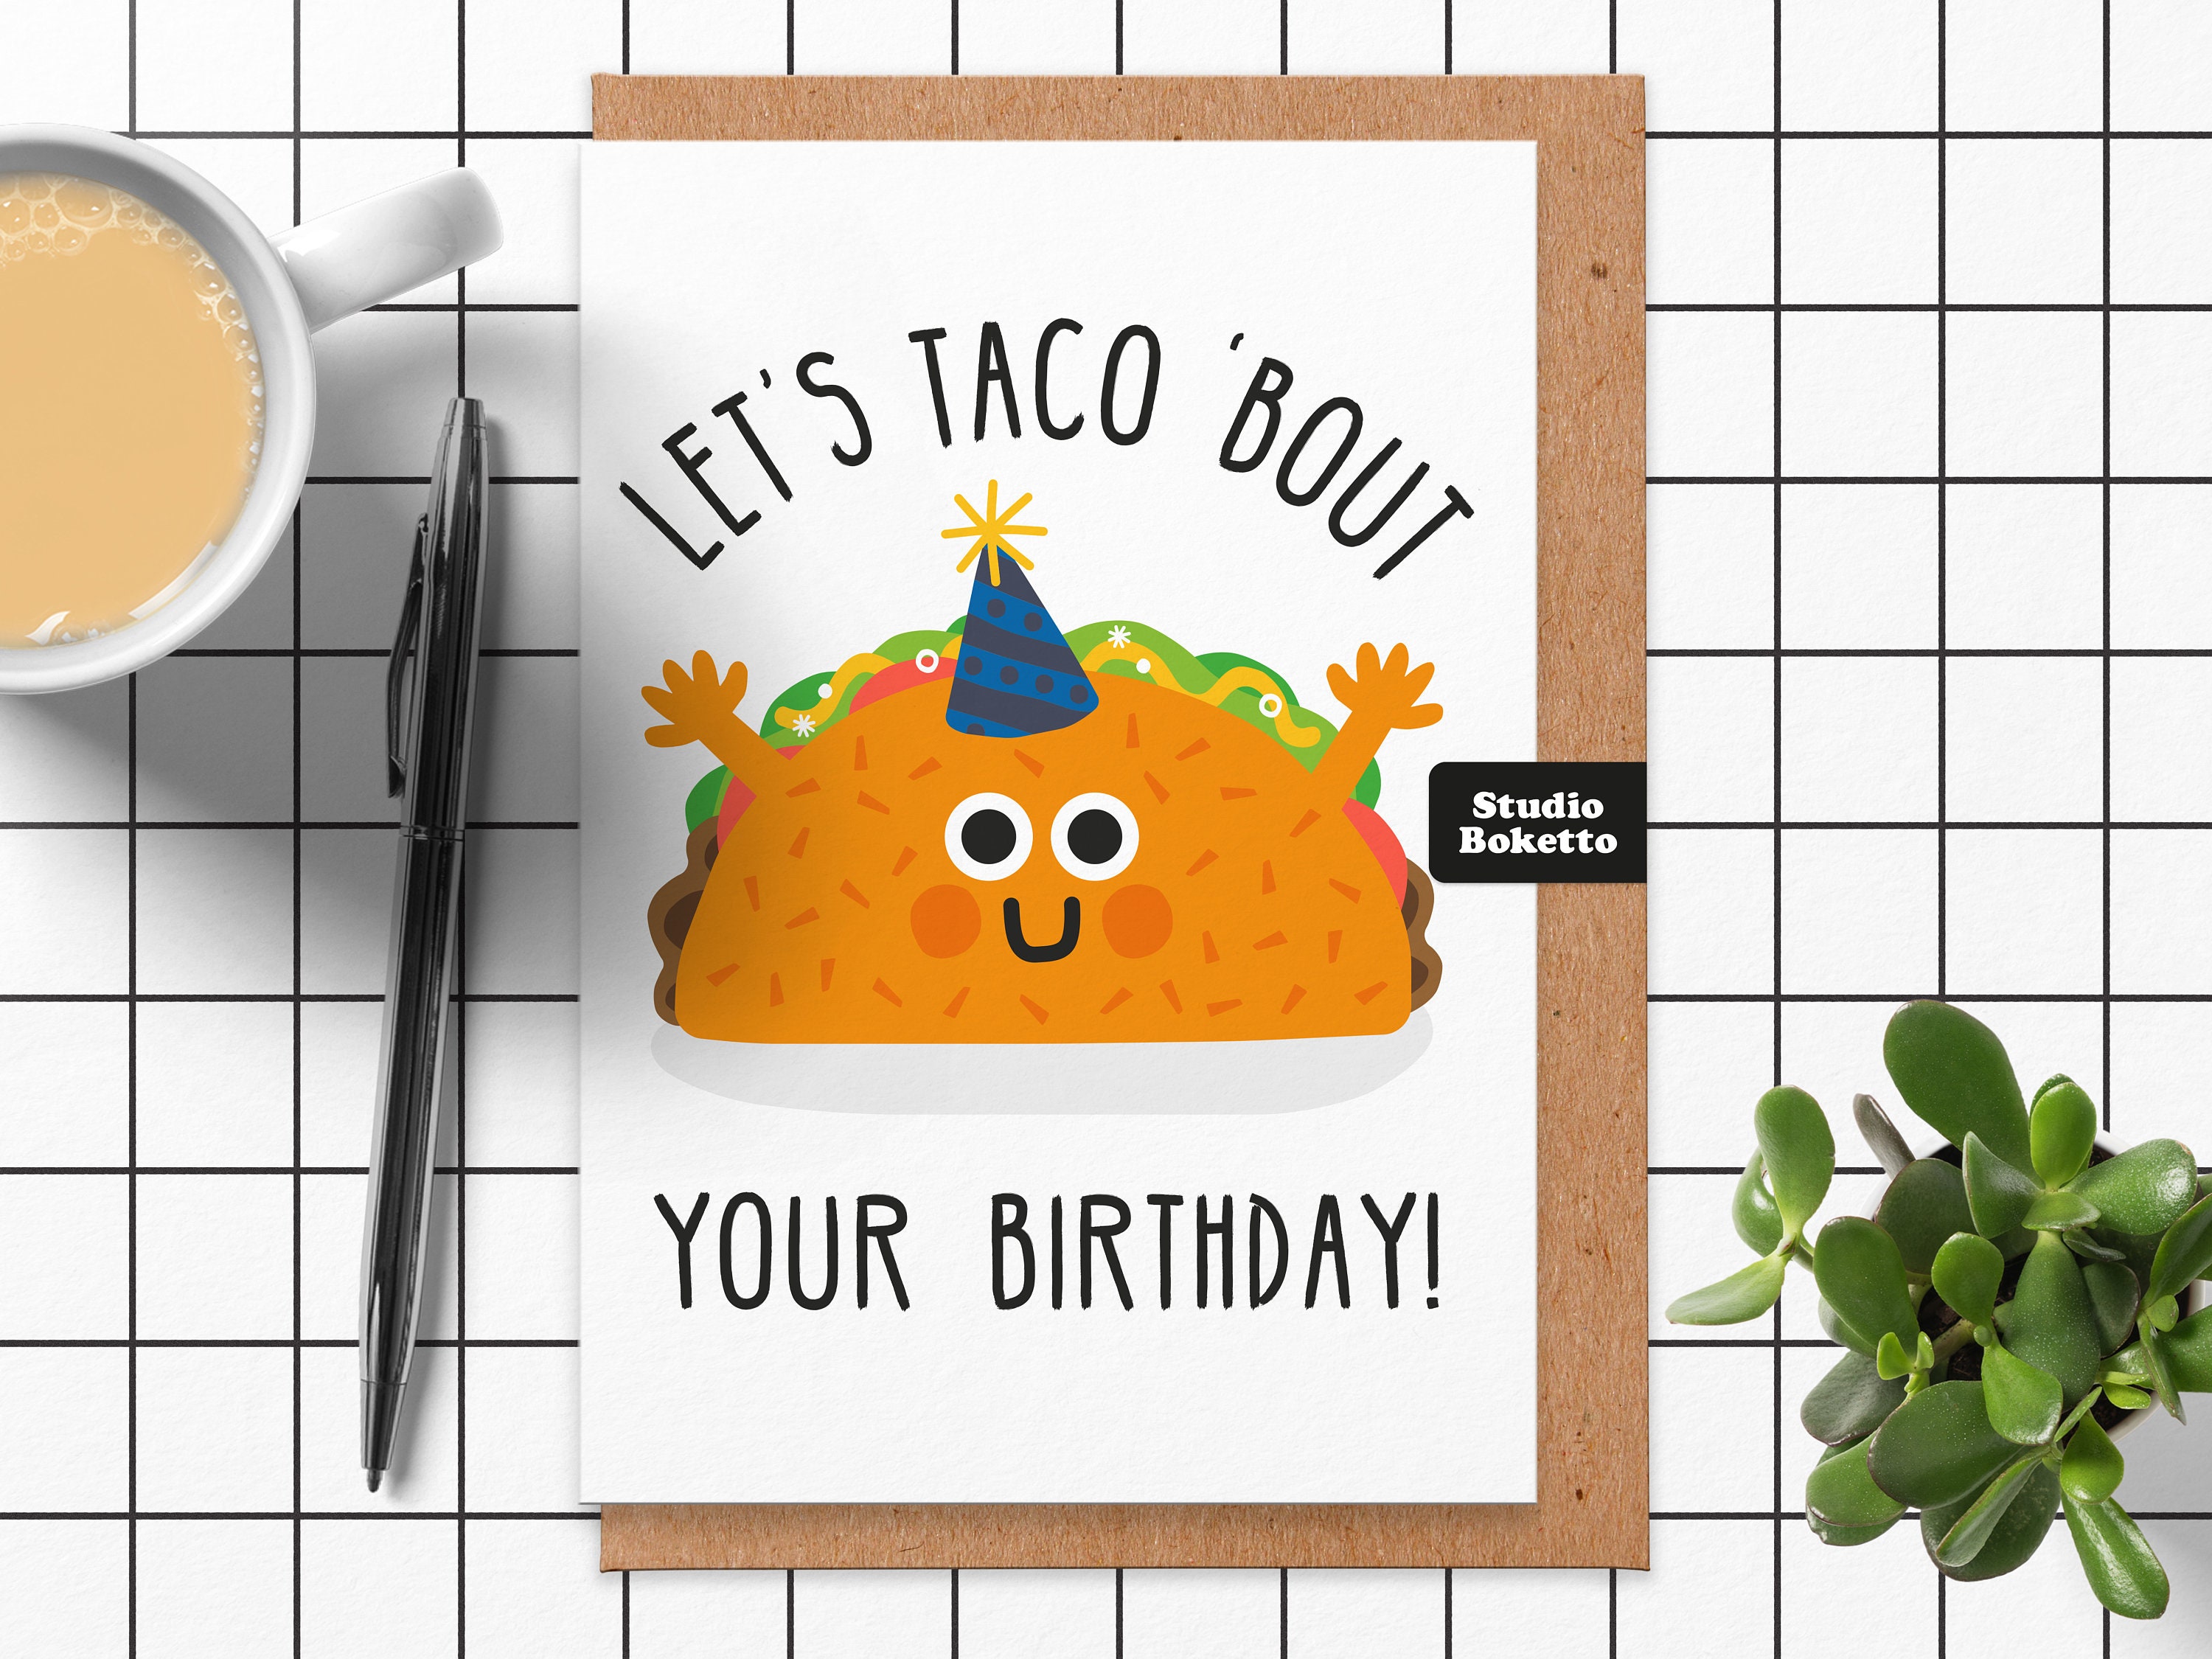 Taco birthday puns